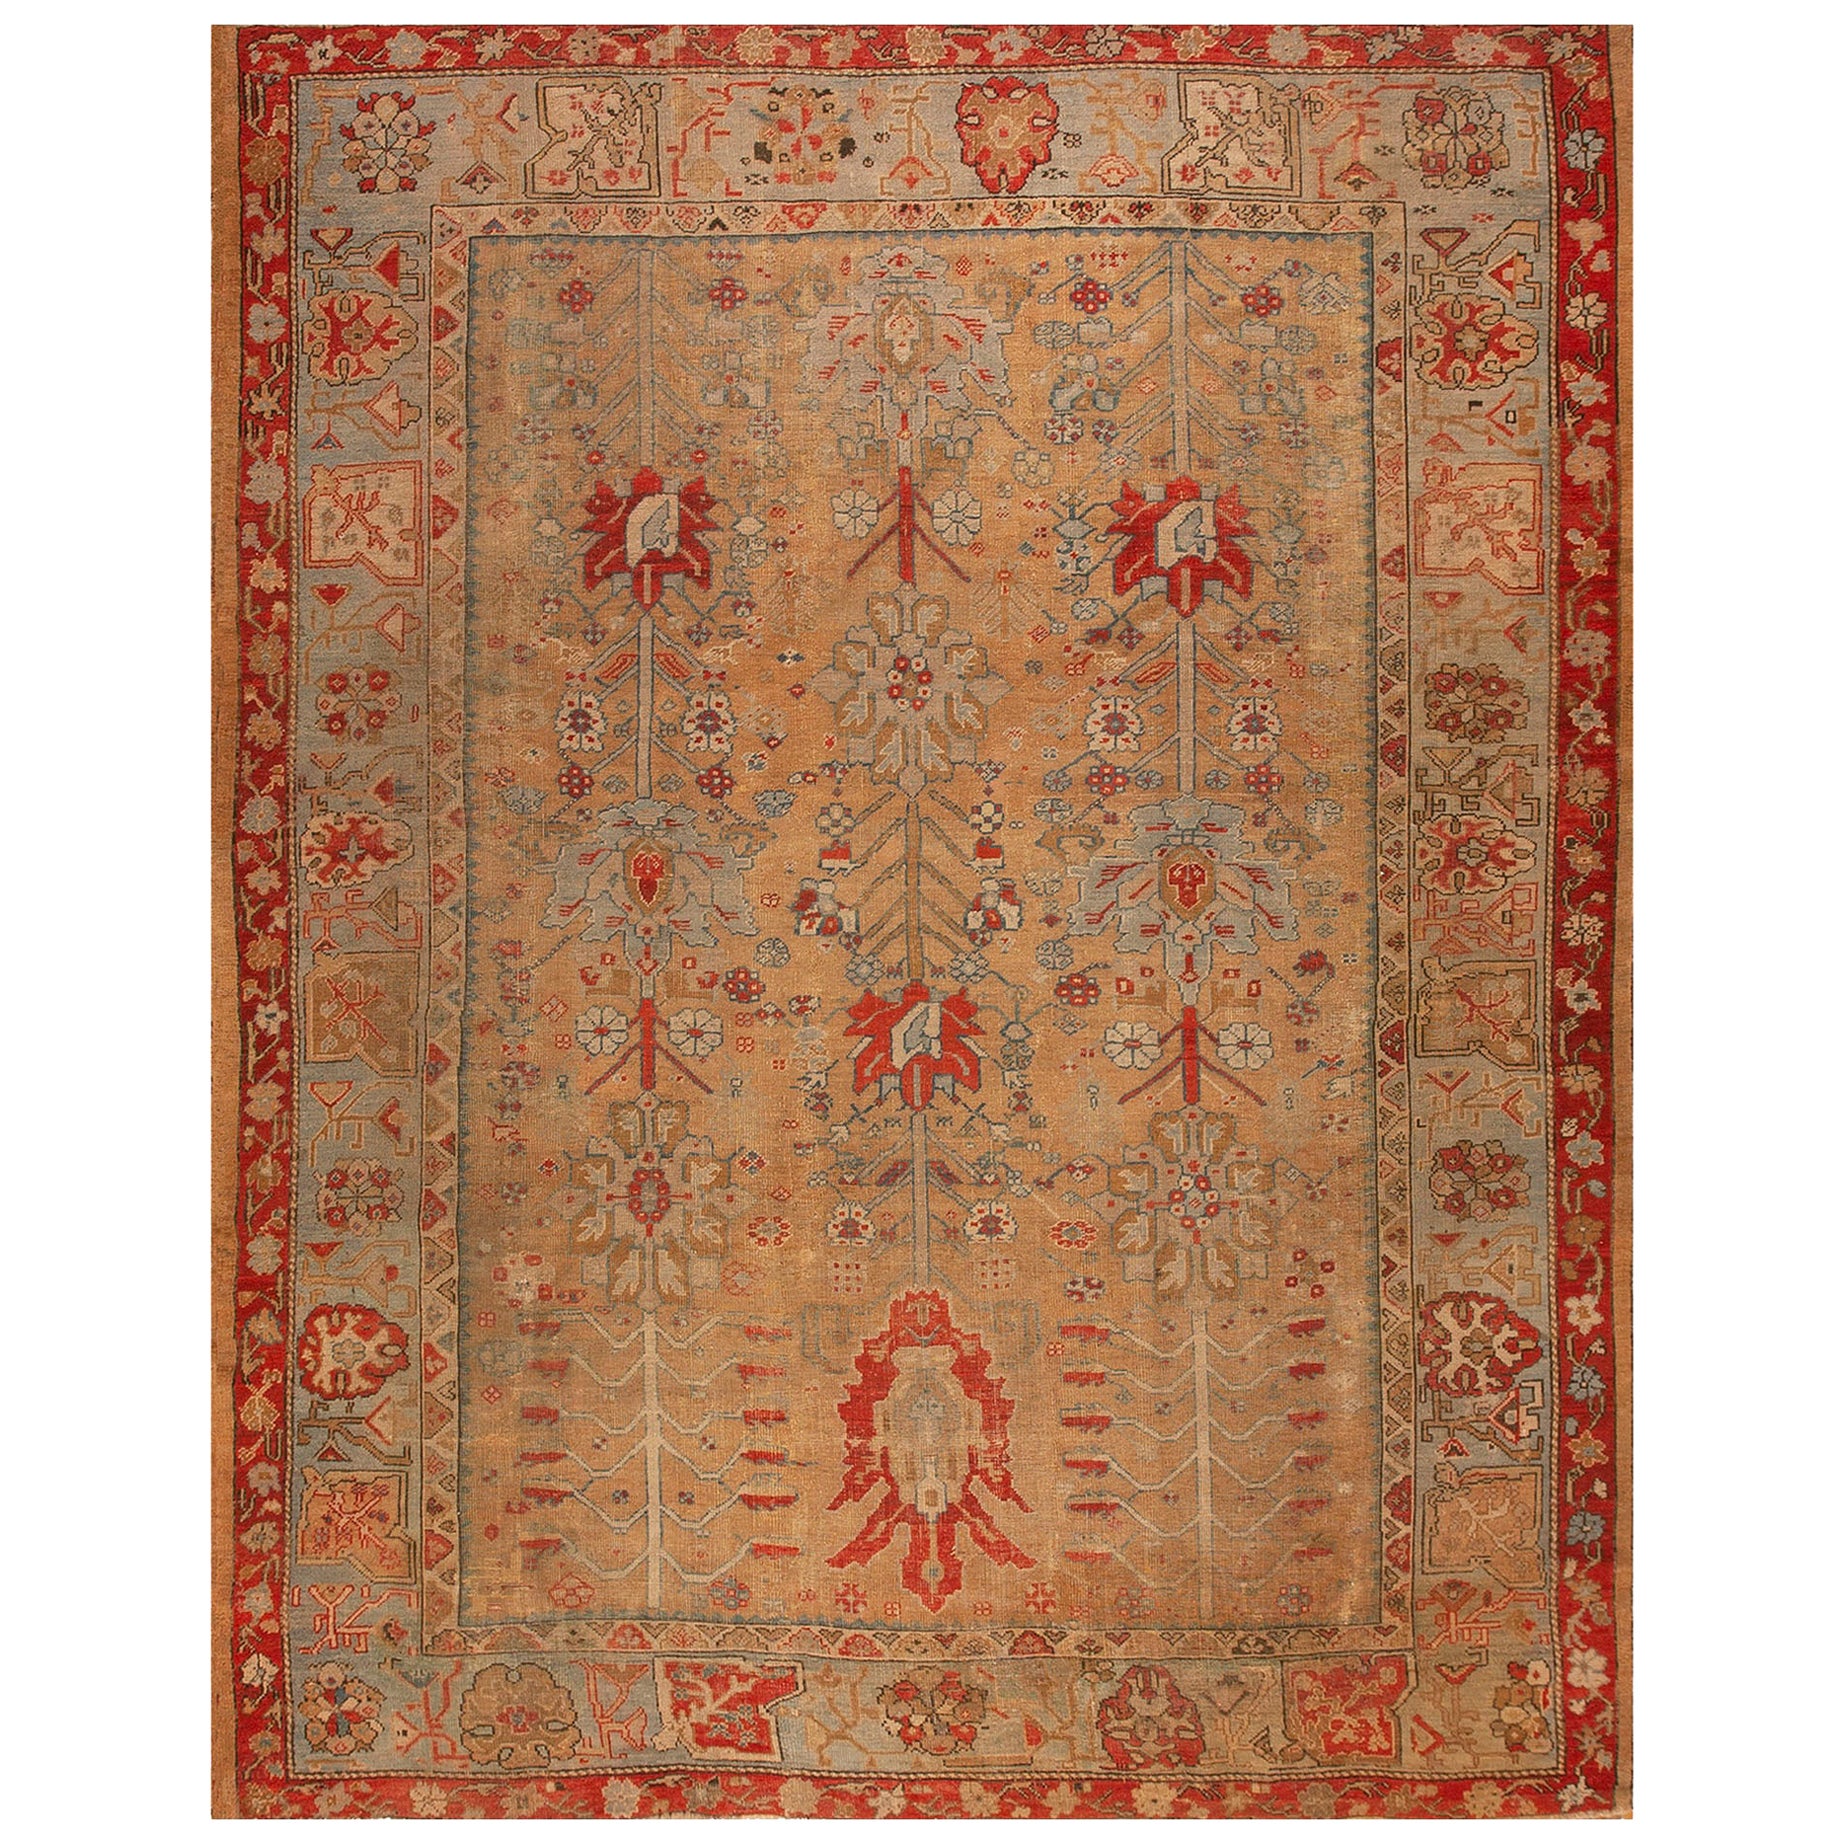 19th Century Turkish Ghiordes Oushak Carpet ( 9'2" x 11'4" - 280 x 345 )